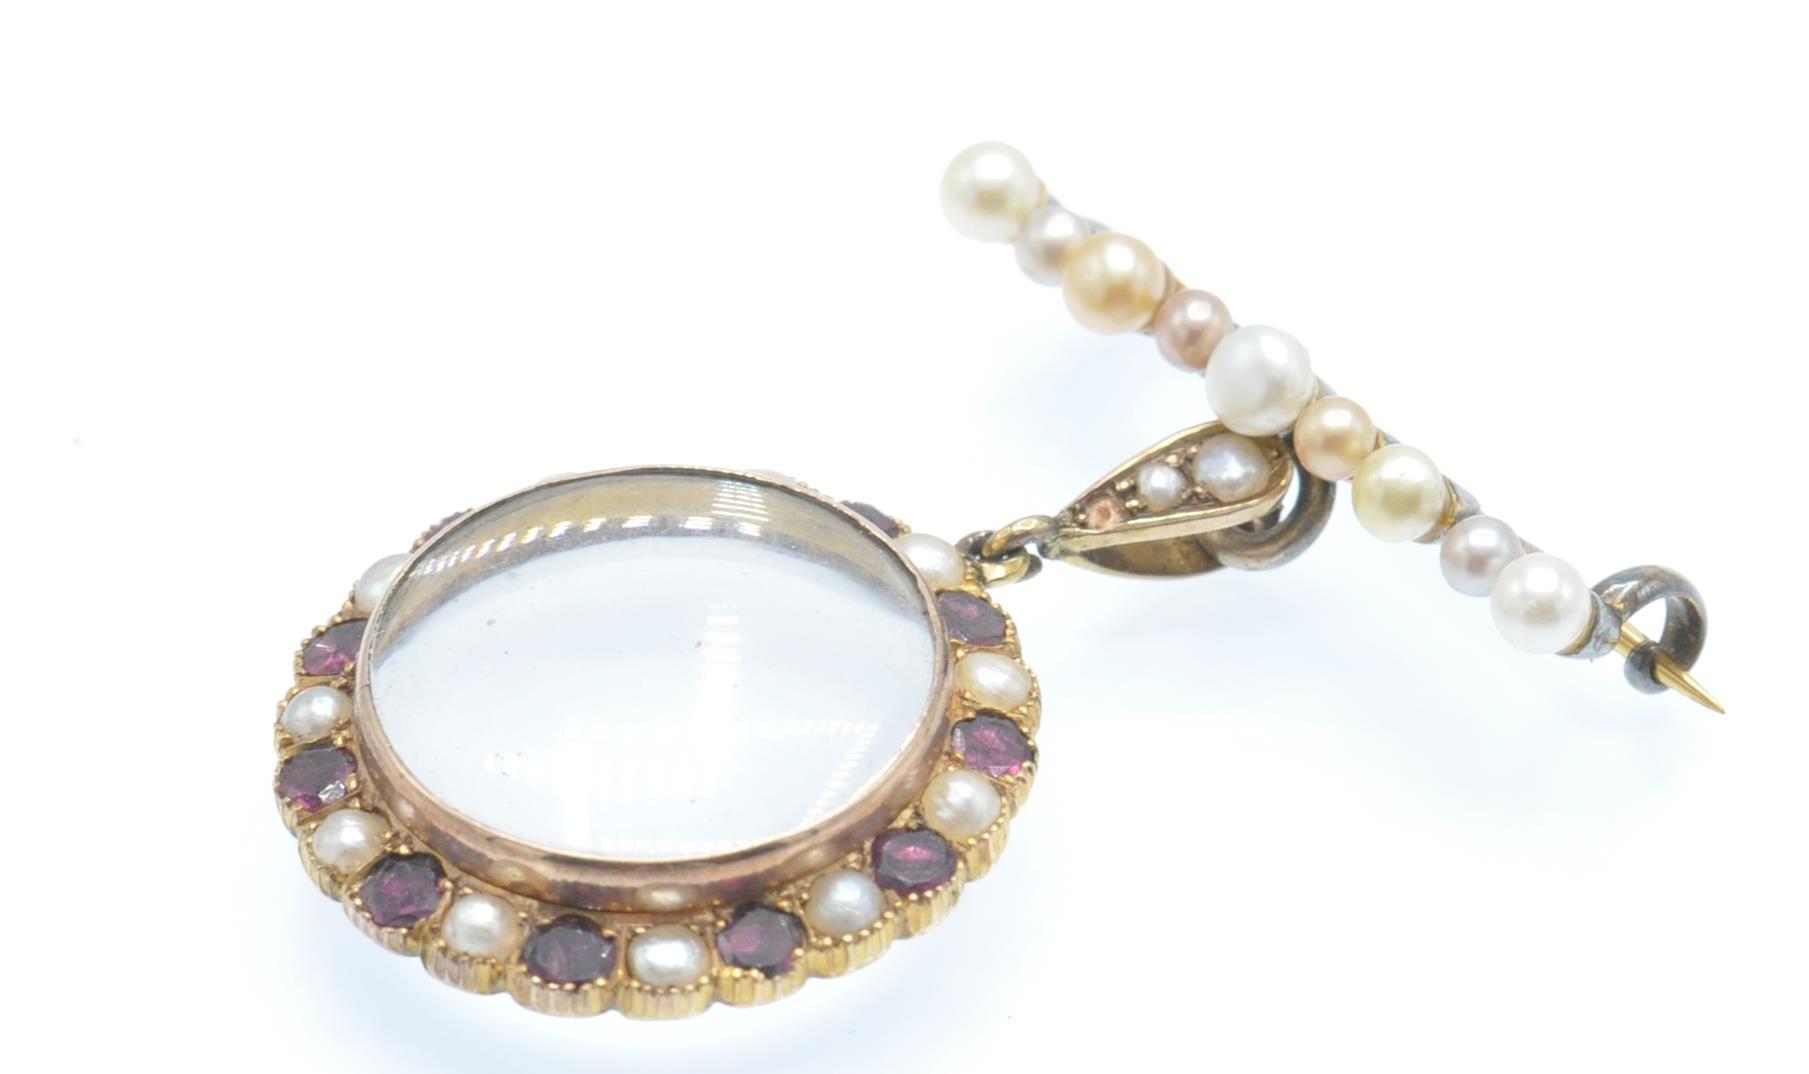 An Antique Pearl & Garnet Brooch Locket - Image 2 of 4